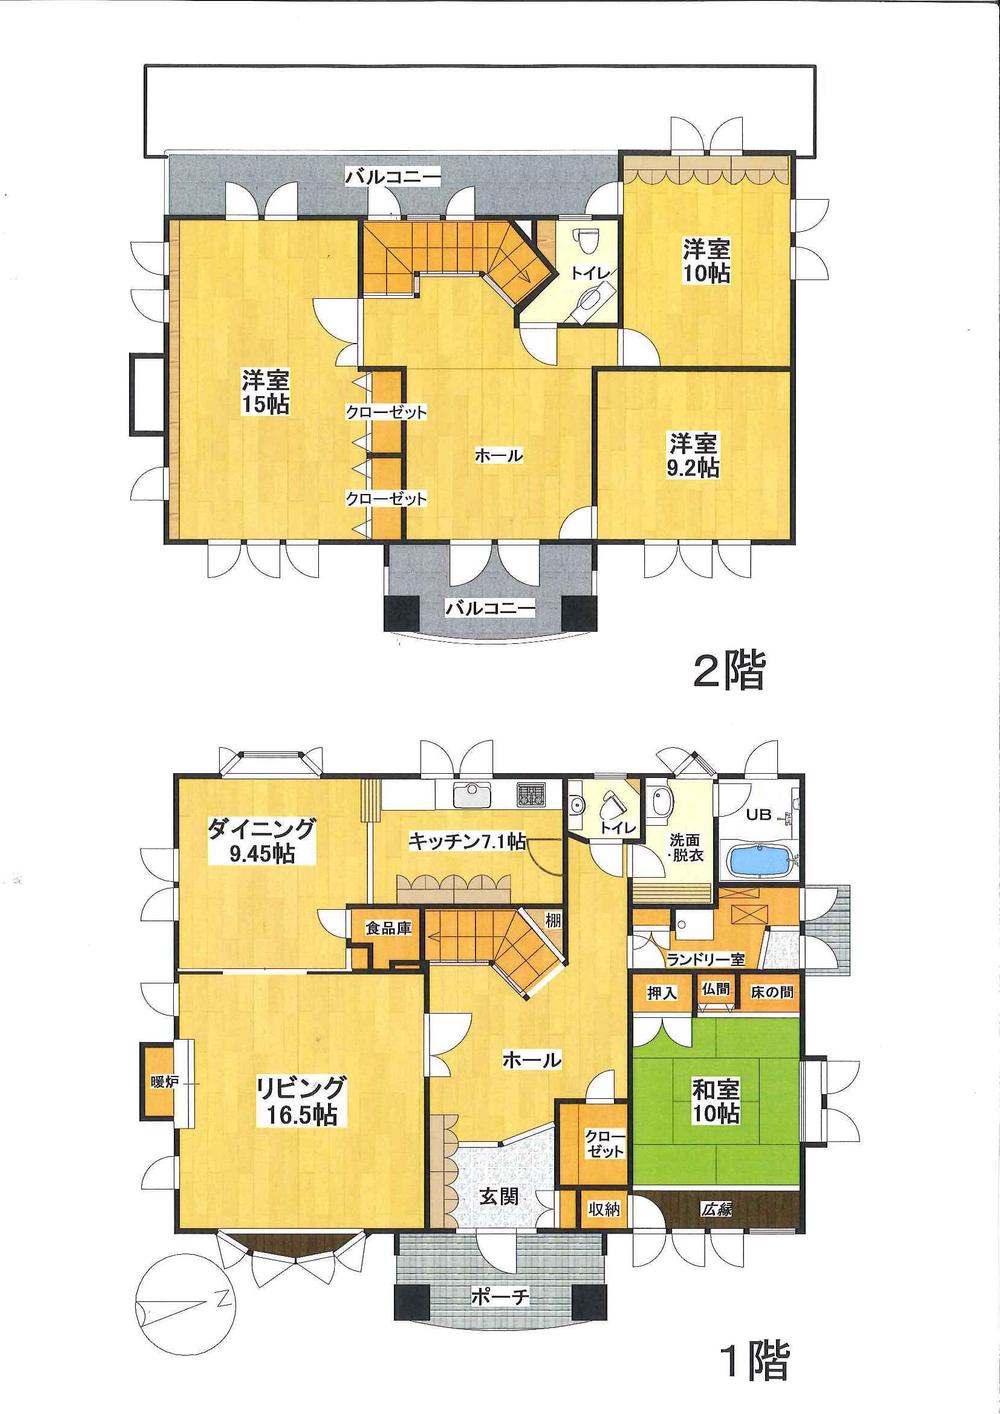 Floor plan. 58 million yen, 4LDK + S (storeroom), Land area 971 sq m , Building area 221.92 sq m